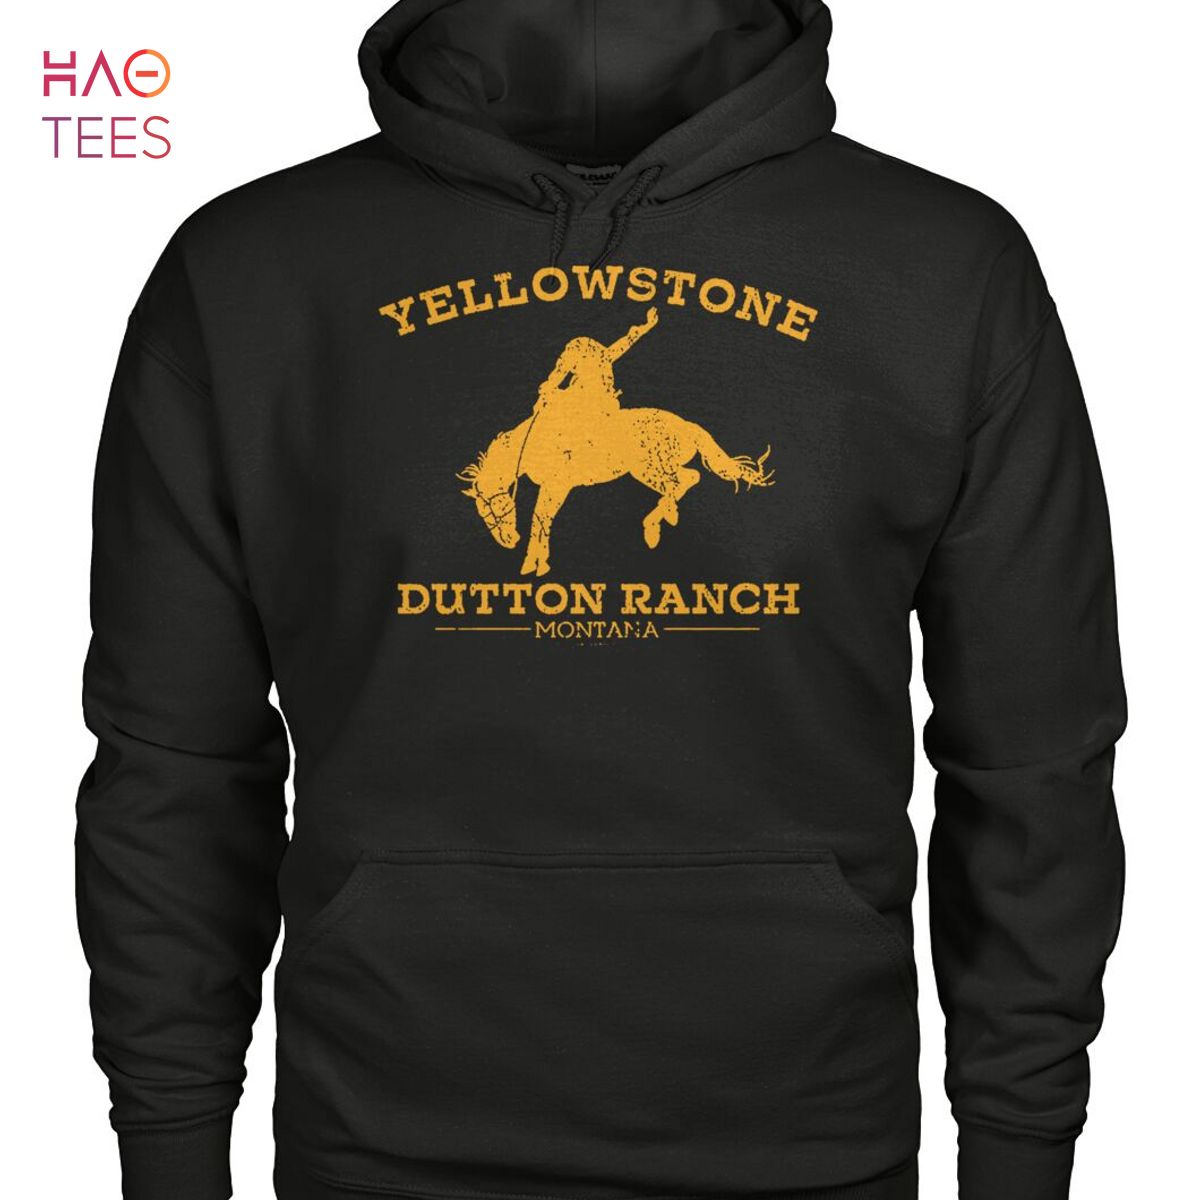 Yellowstone Dutton Ranch Montana Shirt